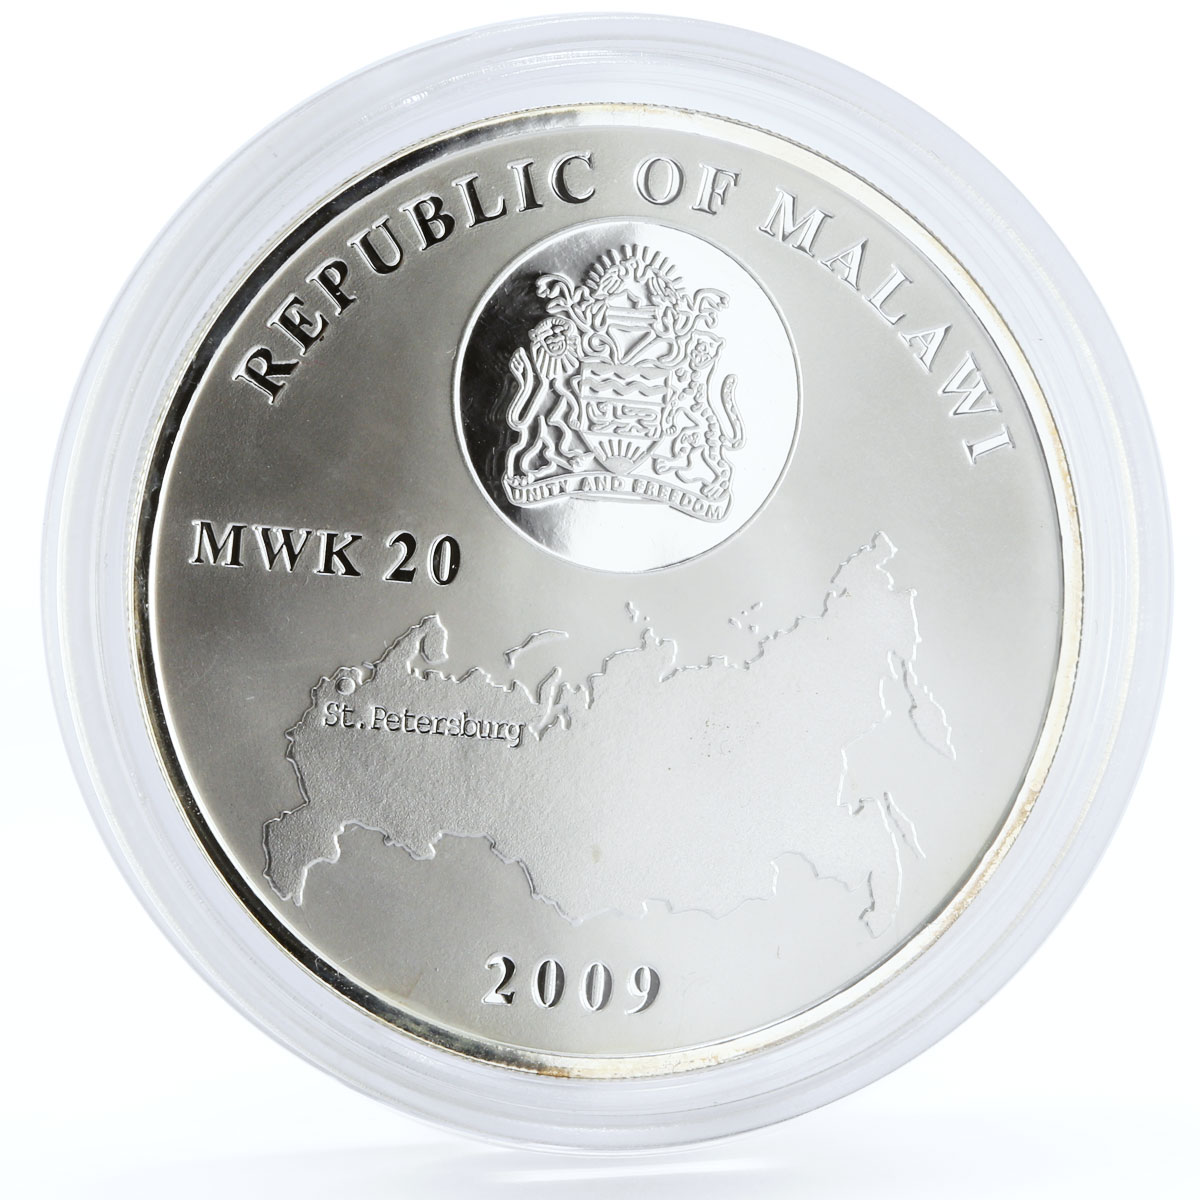 Malawi 20 kwacha Treasures of St Petersburg St Isaac Cathedral silver coin 2009